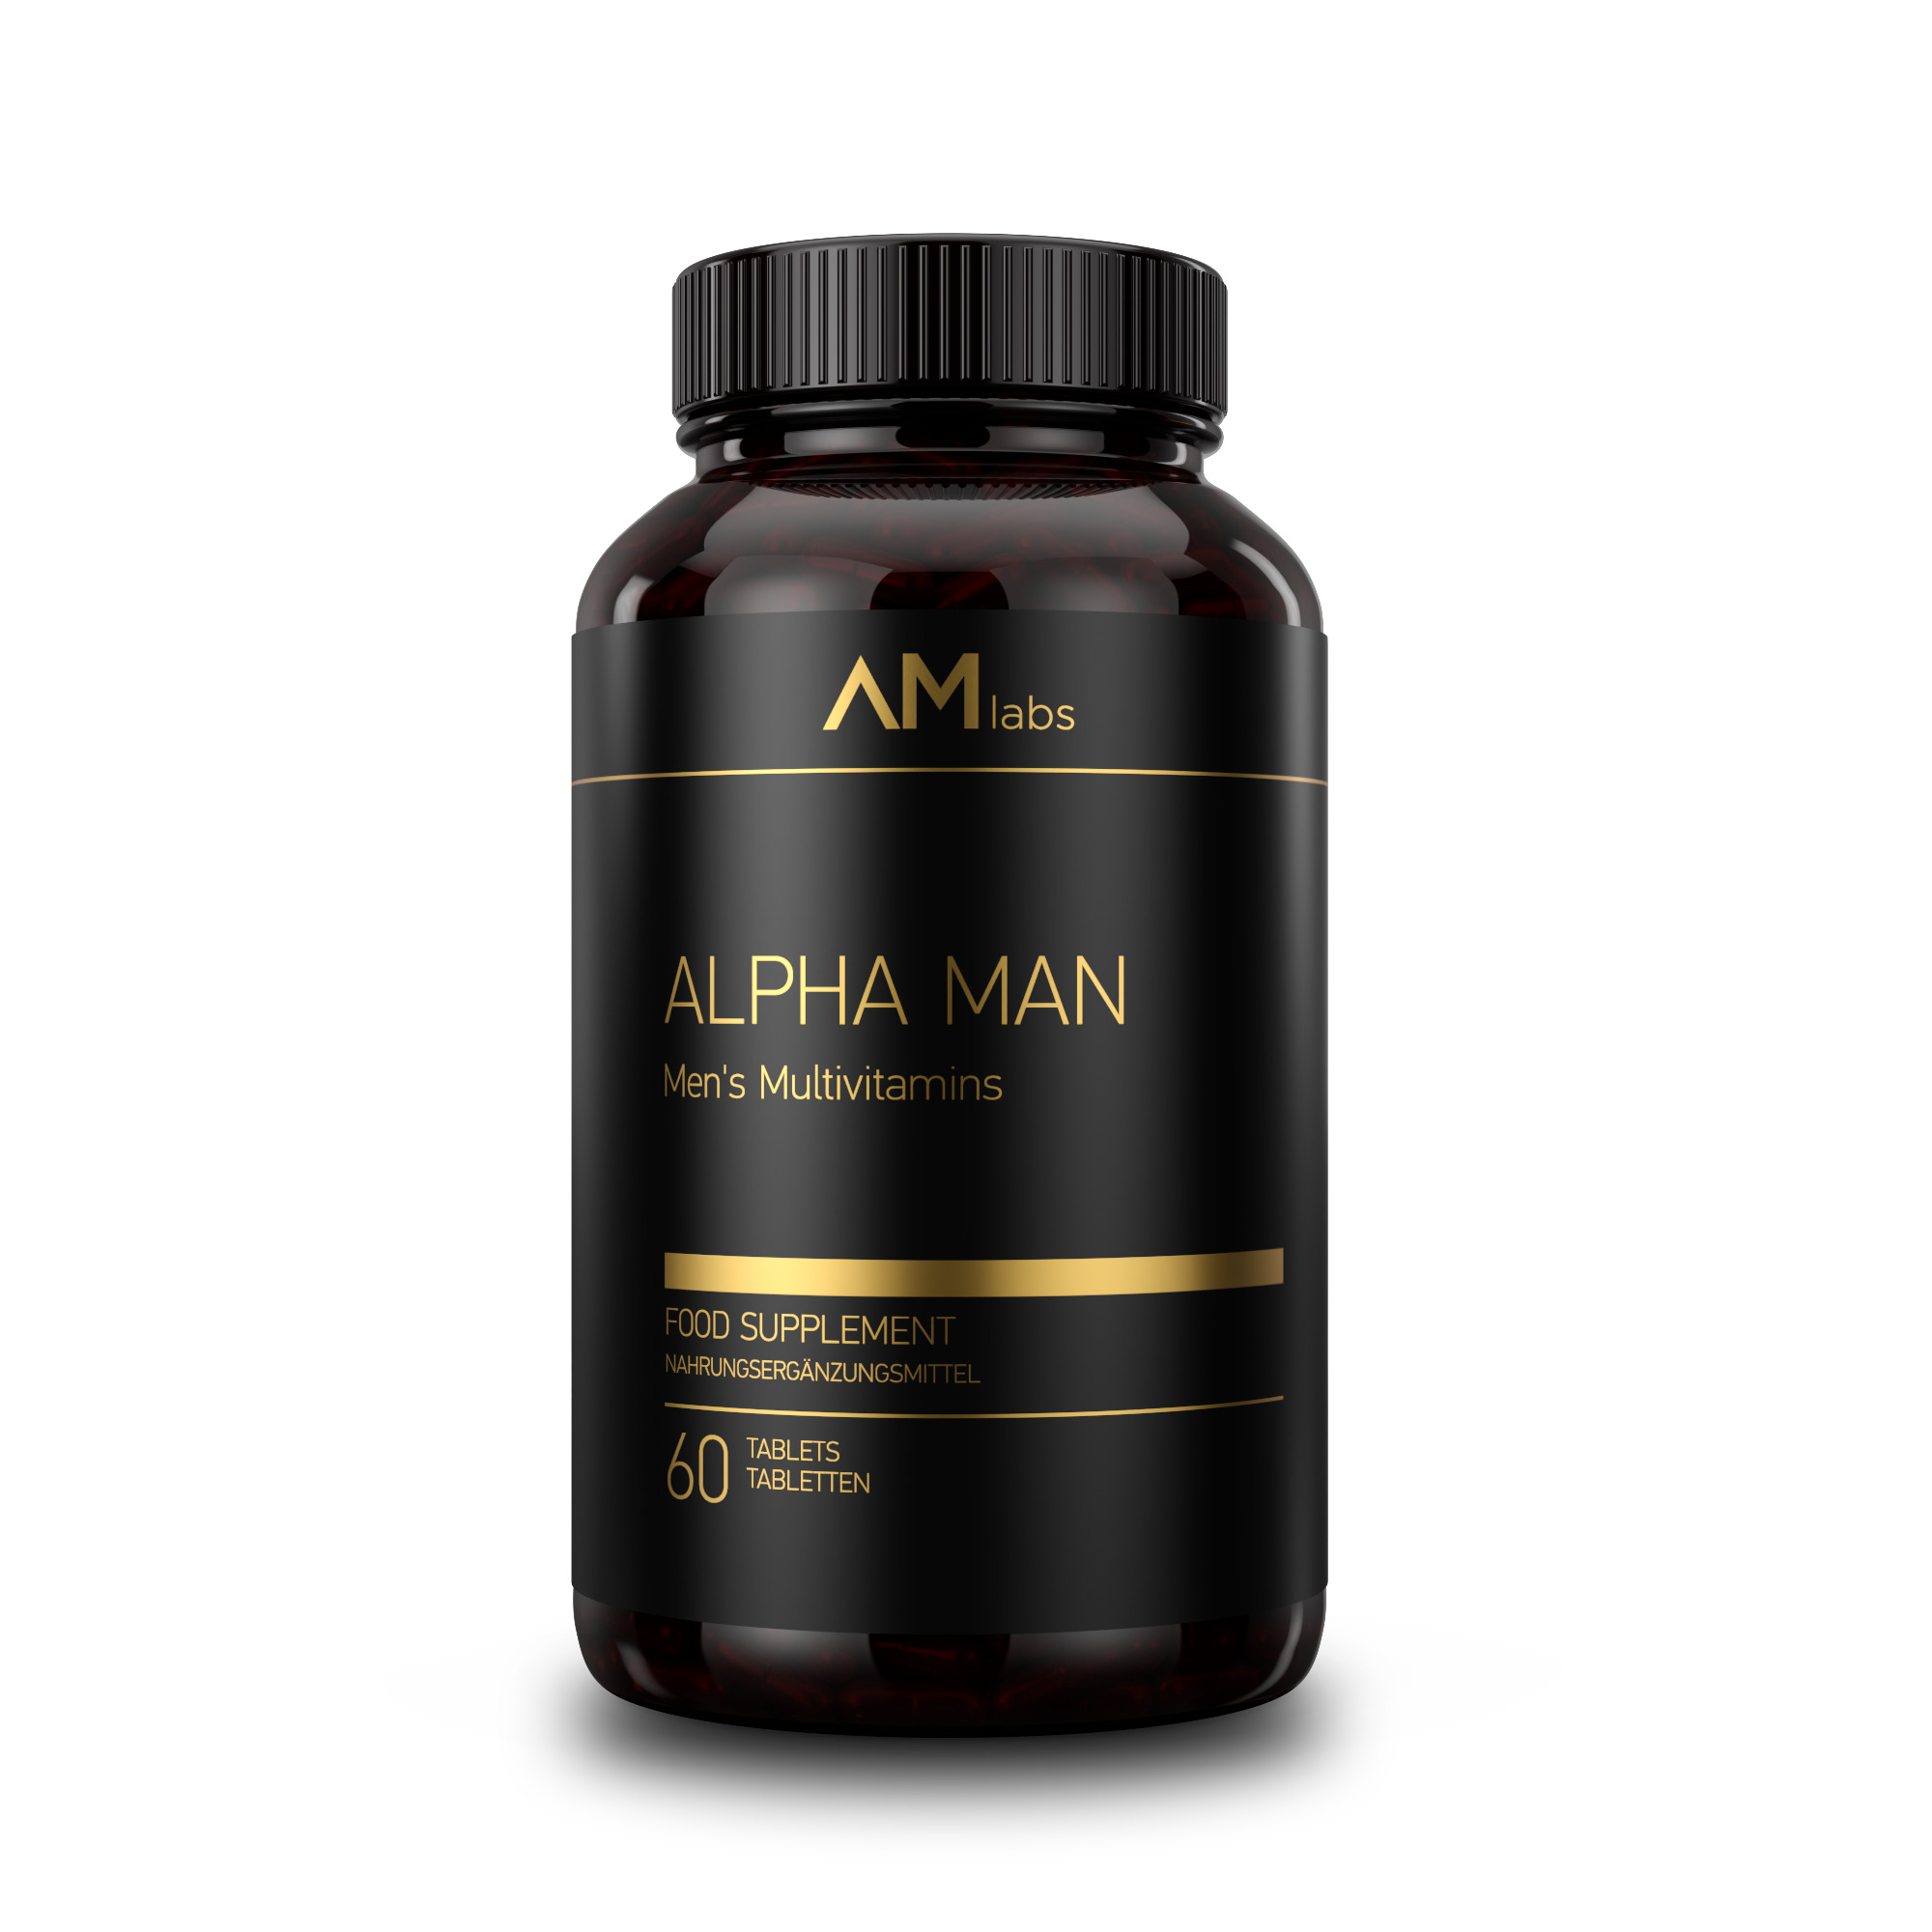 Купить Мультивитаминный коплекс для мужчин ALPHAMALE labs ALPHA MAN таблетки 60 шт.